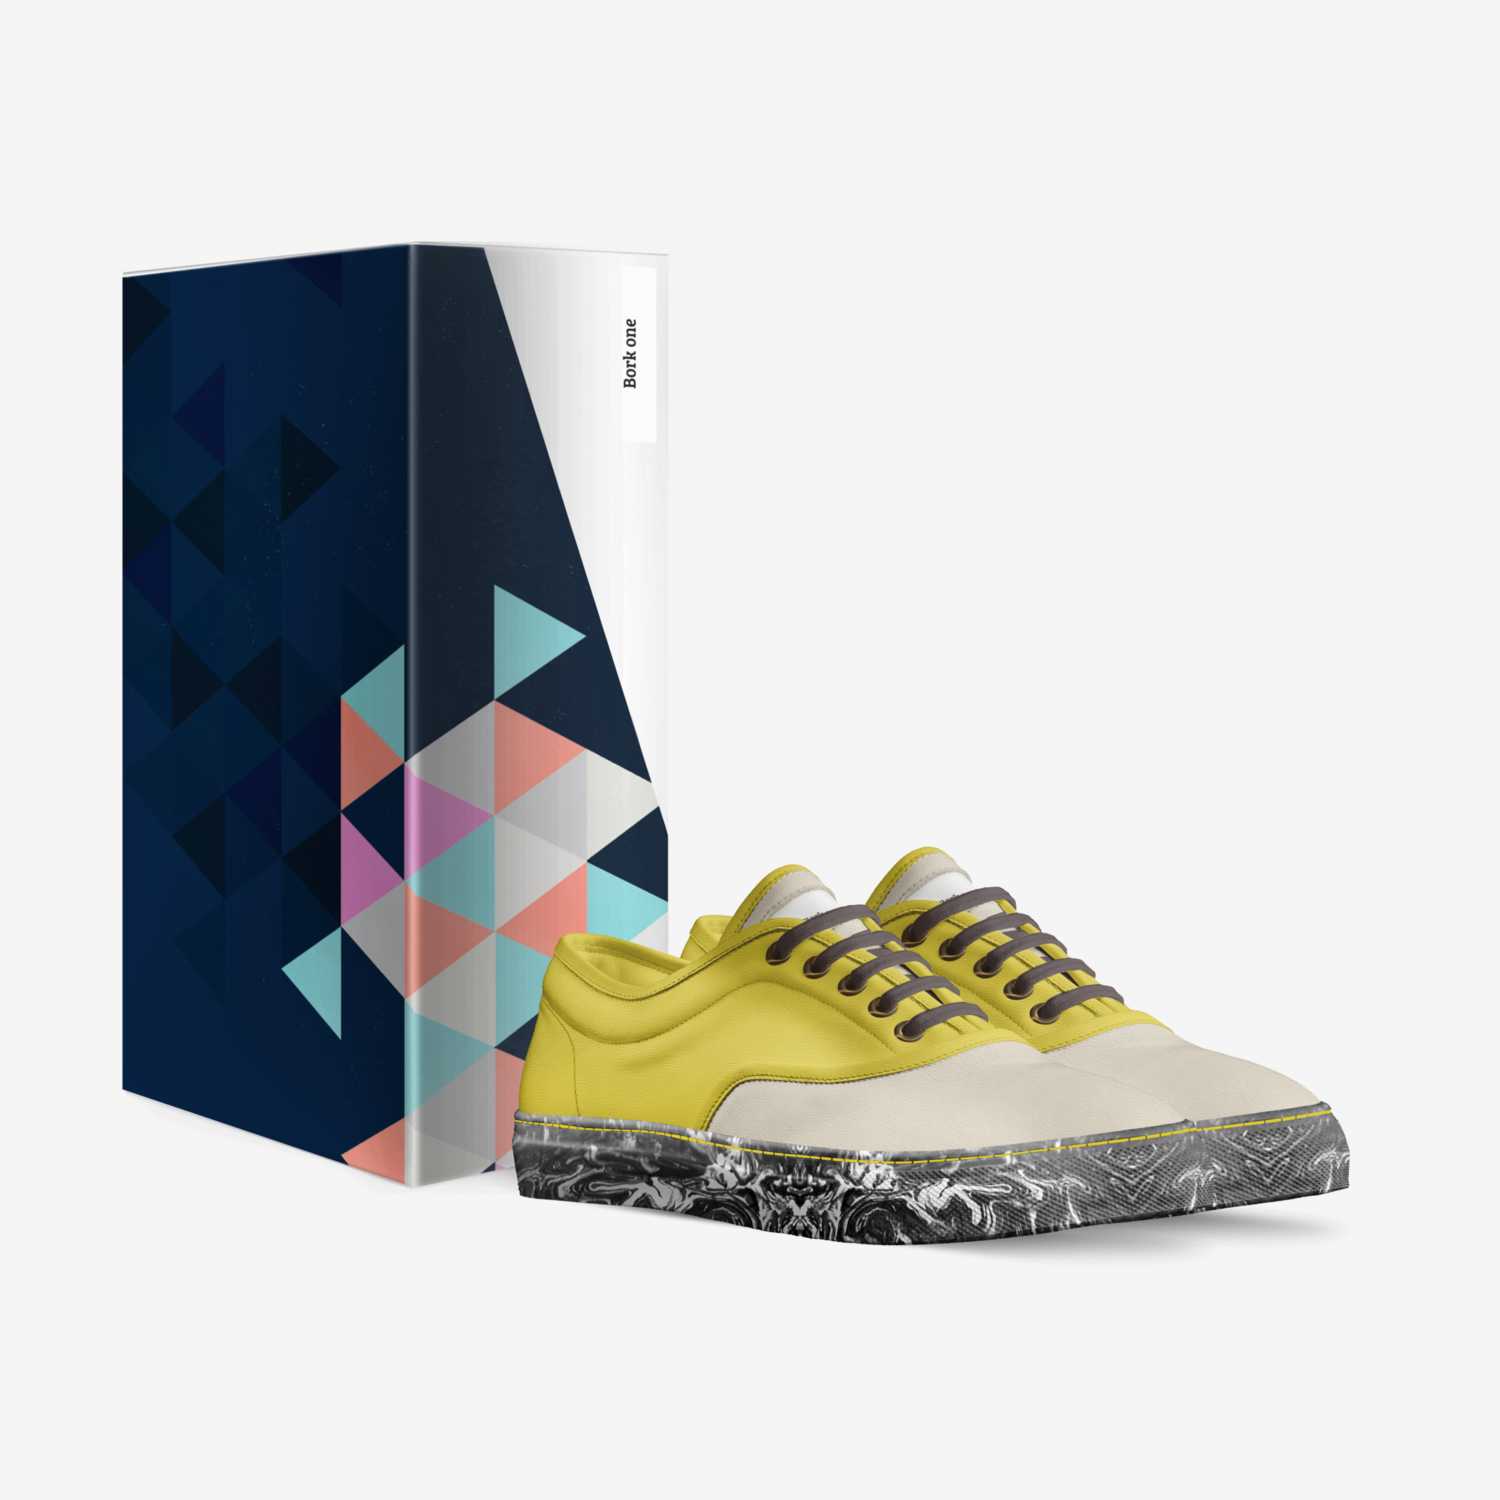 Bork 1 | A Custom Shoe concept by Eb